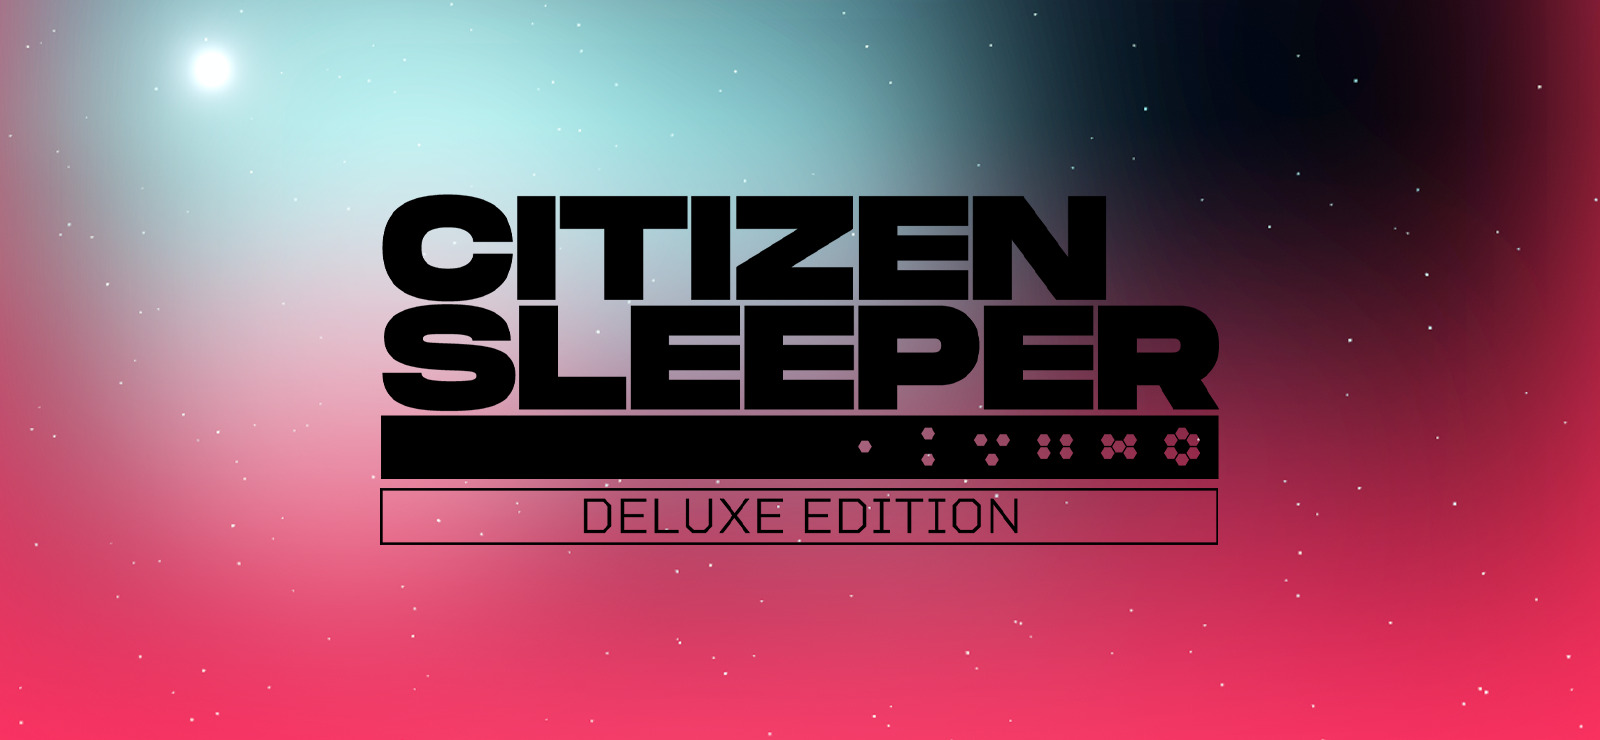 download citizen sleeper gog for free